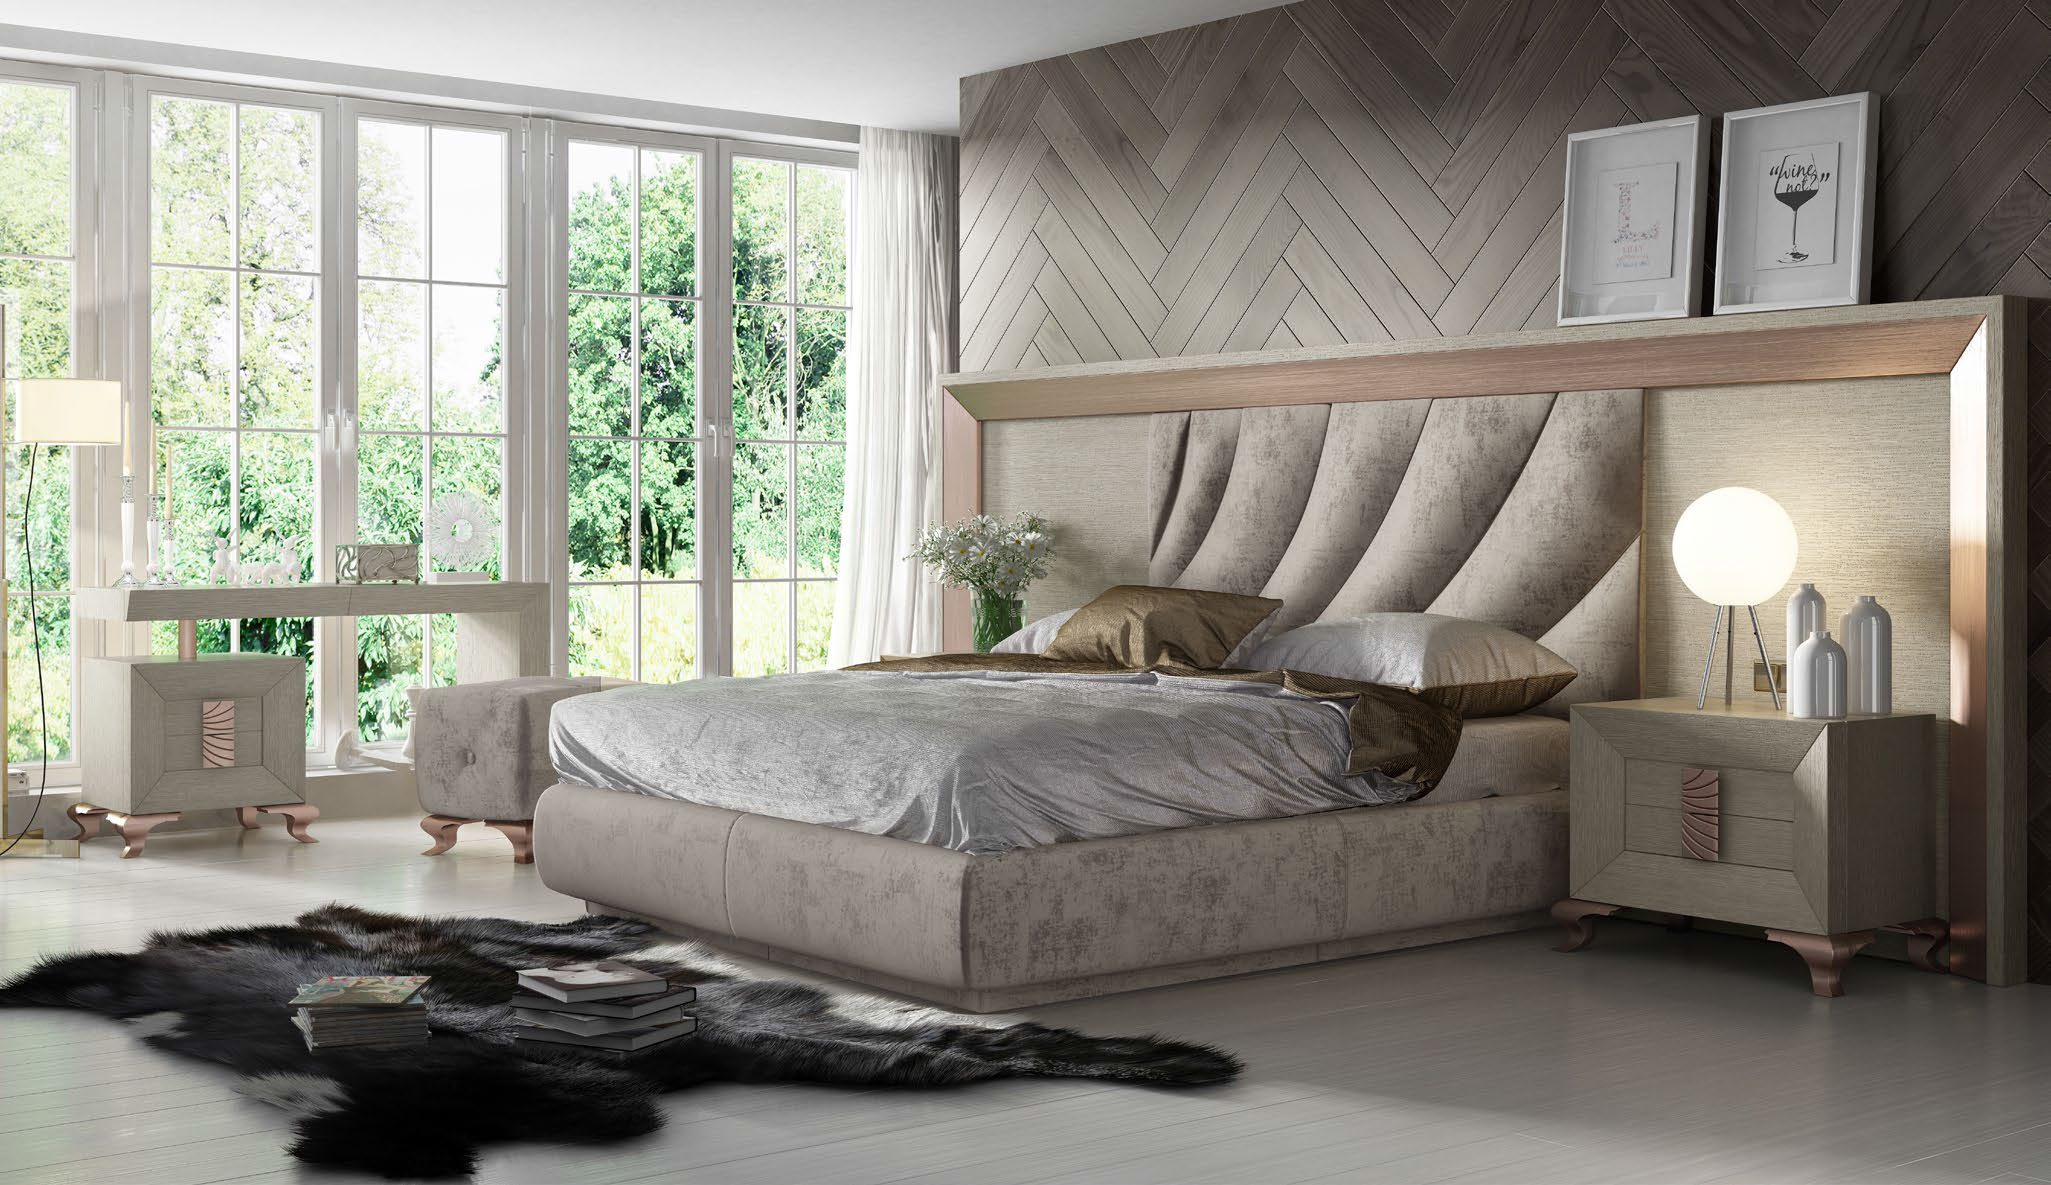 Brands Franco Furniture Bedrooms vol3, Spain DOR 126